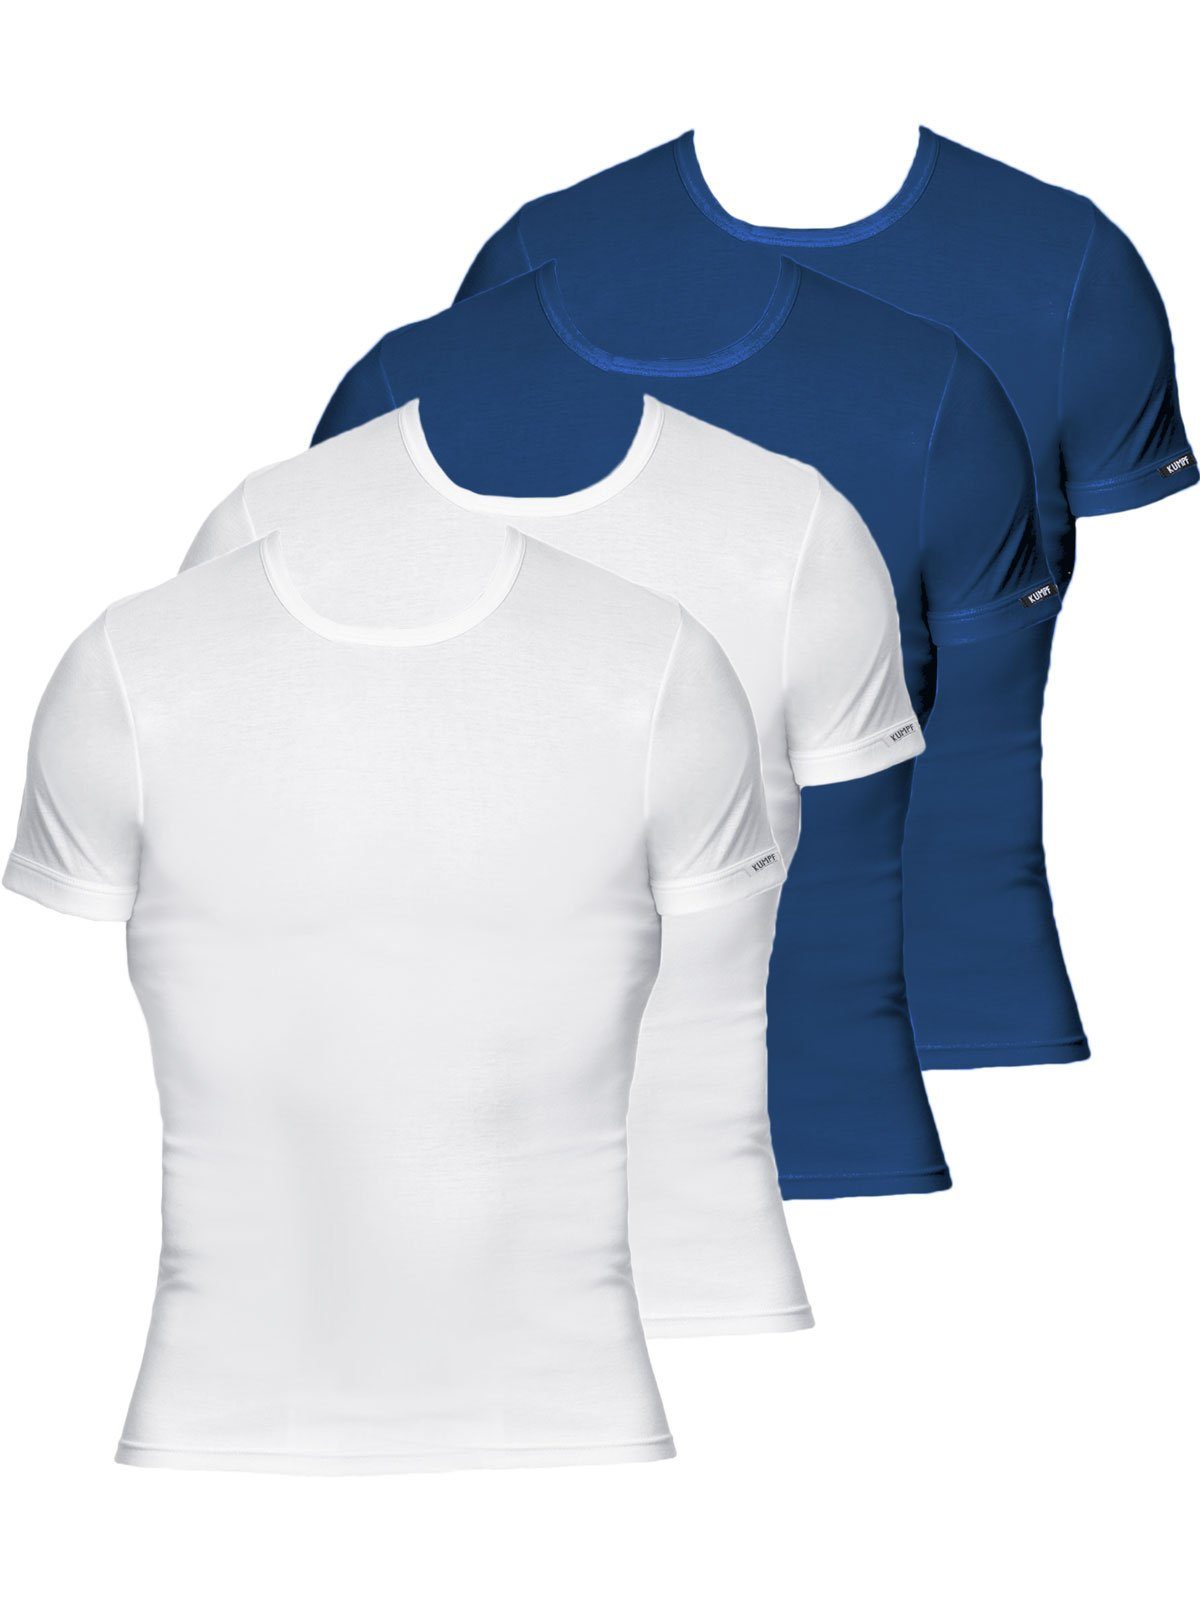 KUMPF Unterziehshirt 4er Sparpack Herren T-Shirt Bio Cotton (Spar-Set, 4-St) hohe Markenqualität darkblue weiss